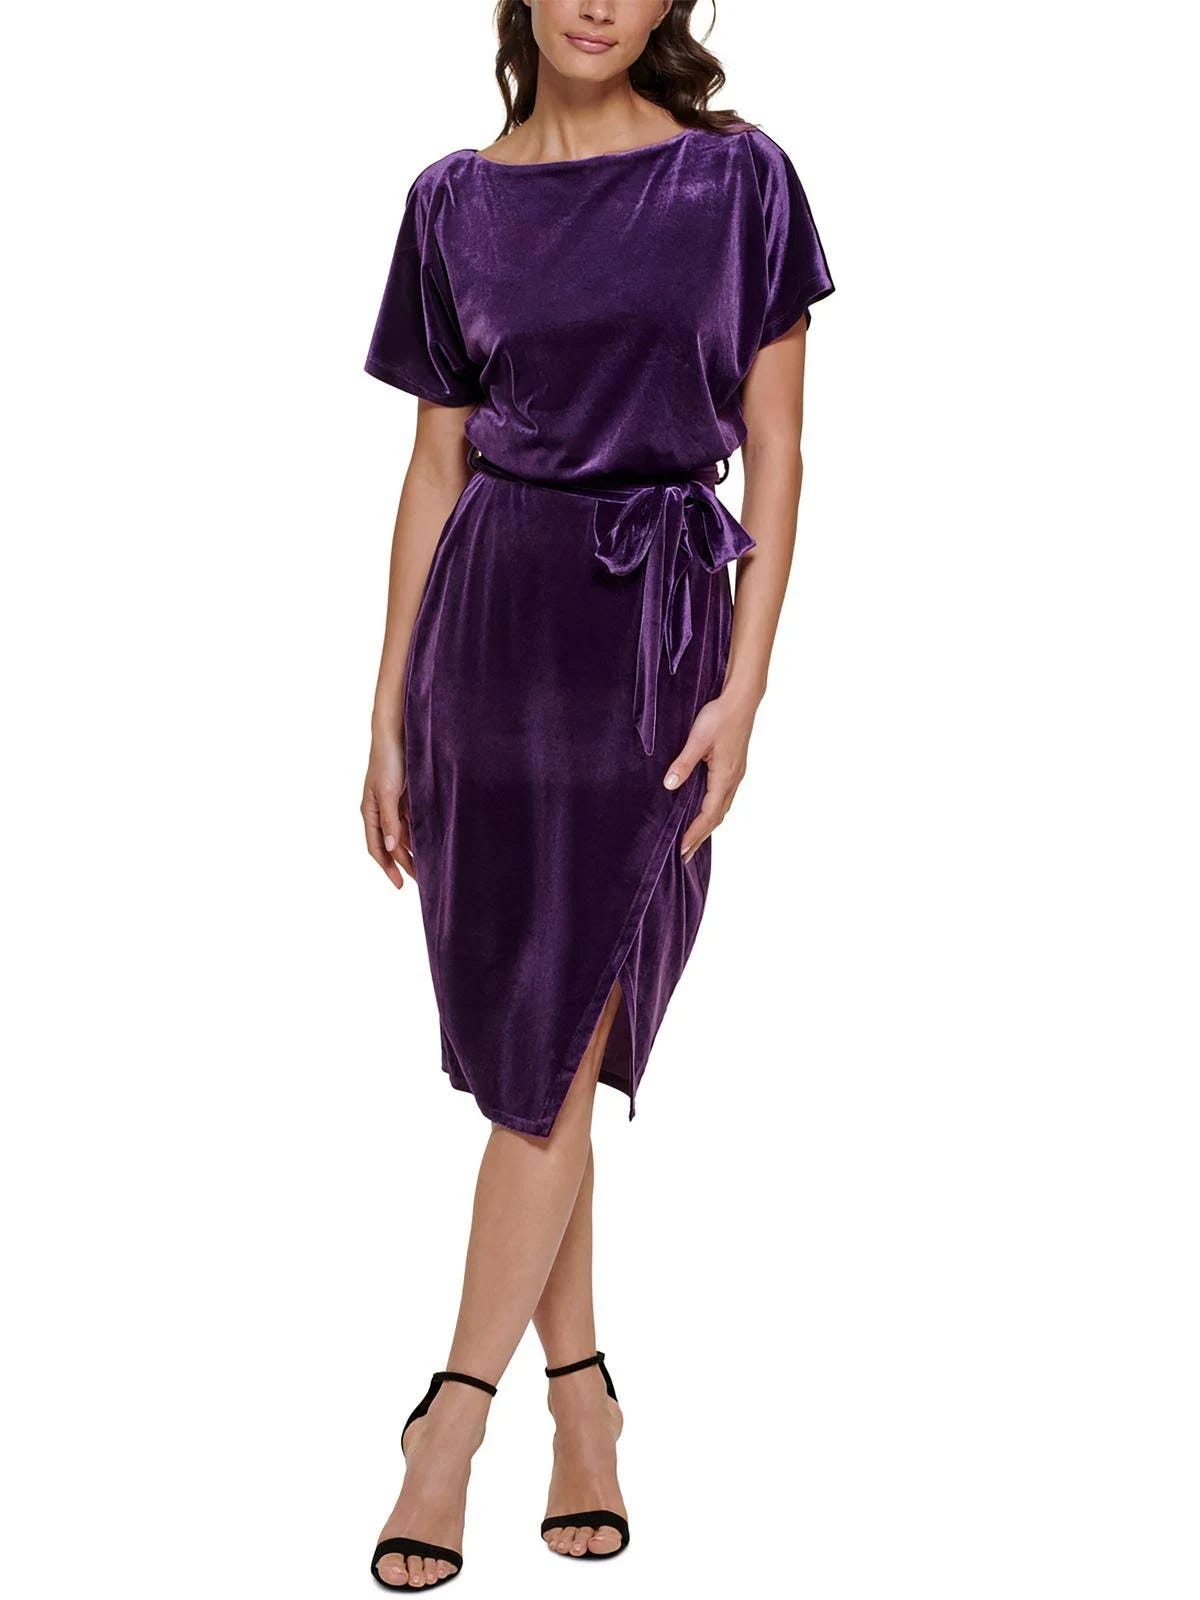 Kensie's Stretch-velvet Midi Dress in Dark Purple with Belted Design | Image